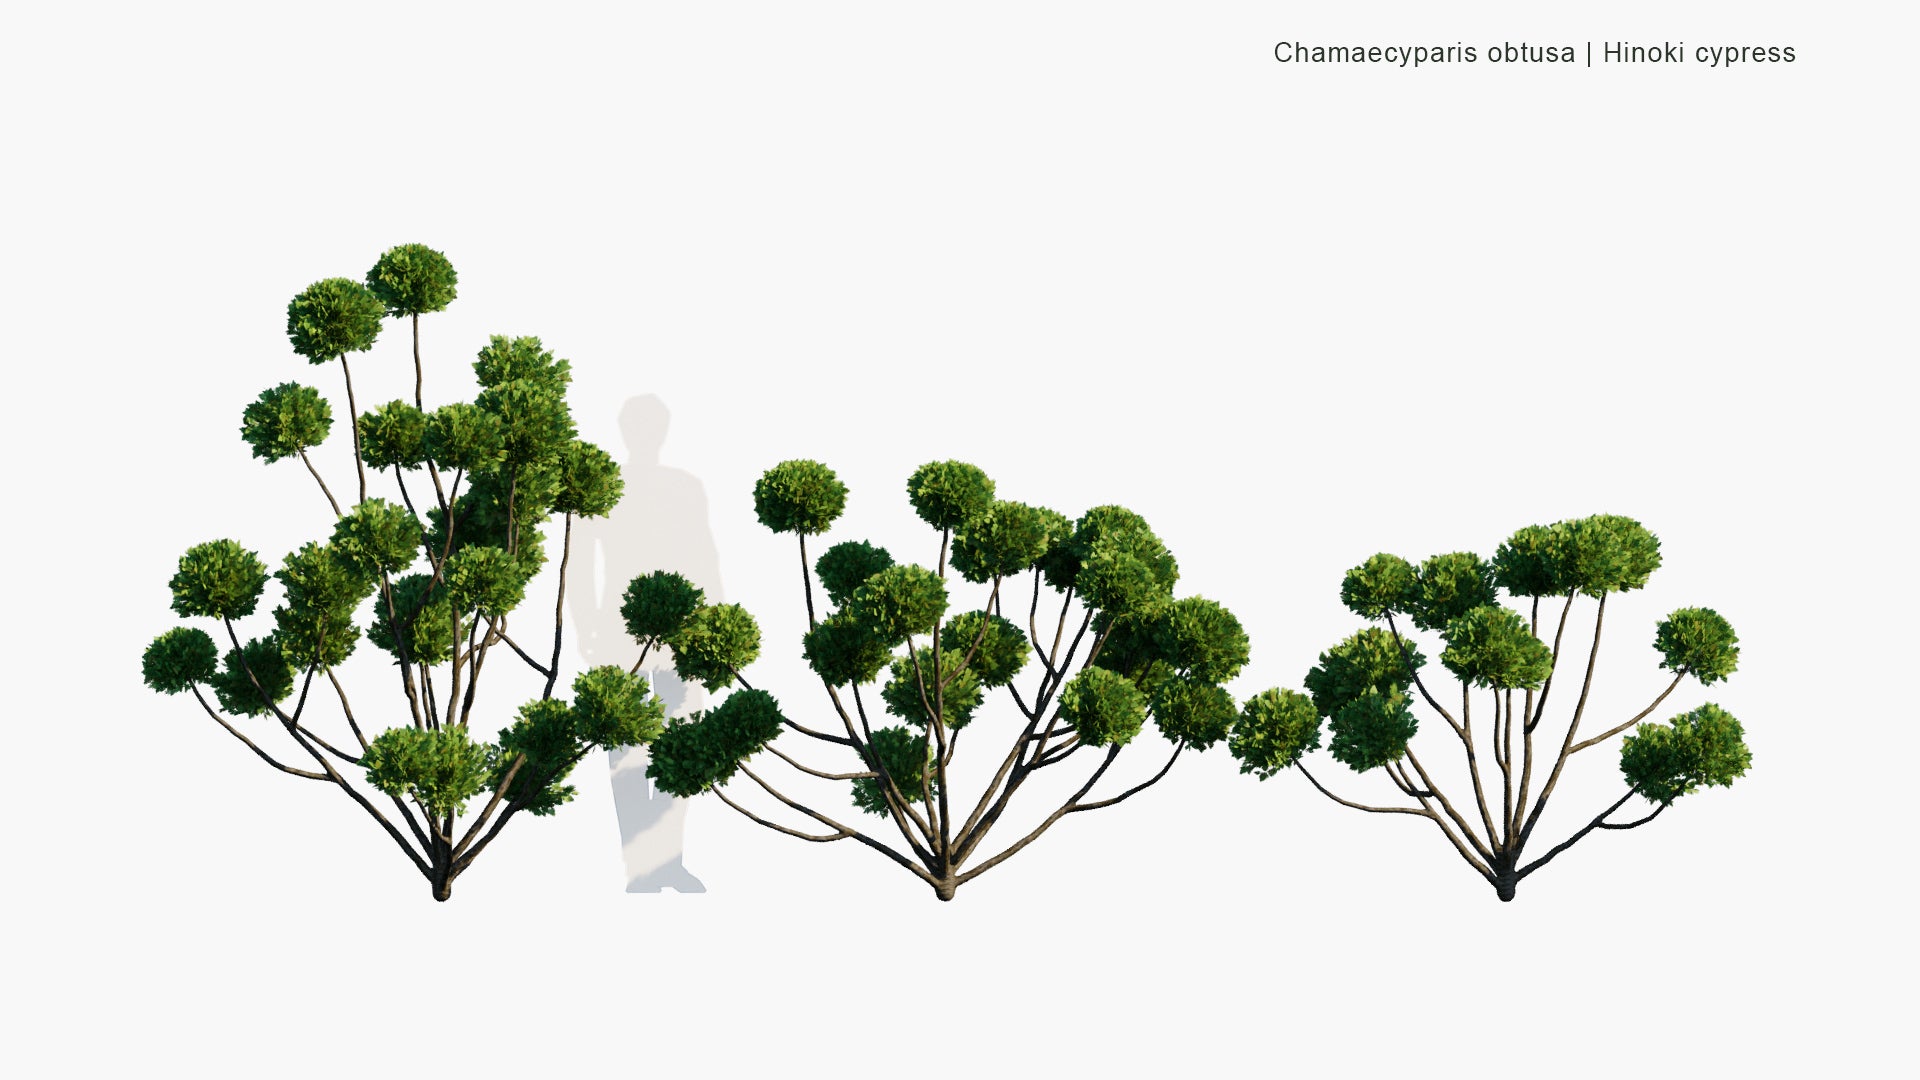 Low Poly Chamaecyparis Obtusa - Japanese Cypress, Hinoki Cypress, Hinoki (3D Model)